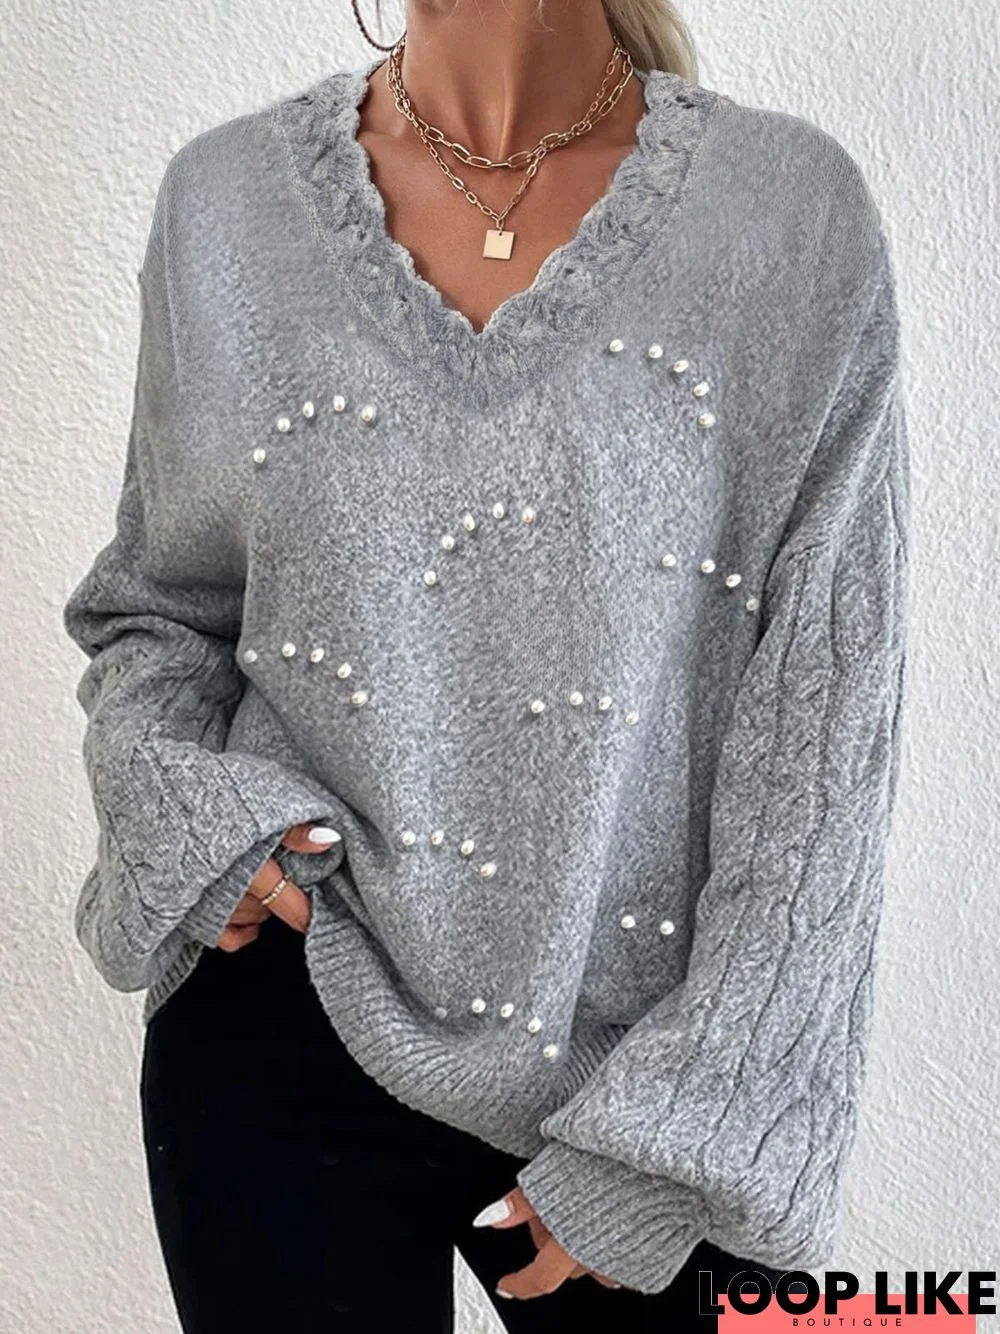 Wool/Knitting V-neck Pearl Tunic Sweater Knit Jumper